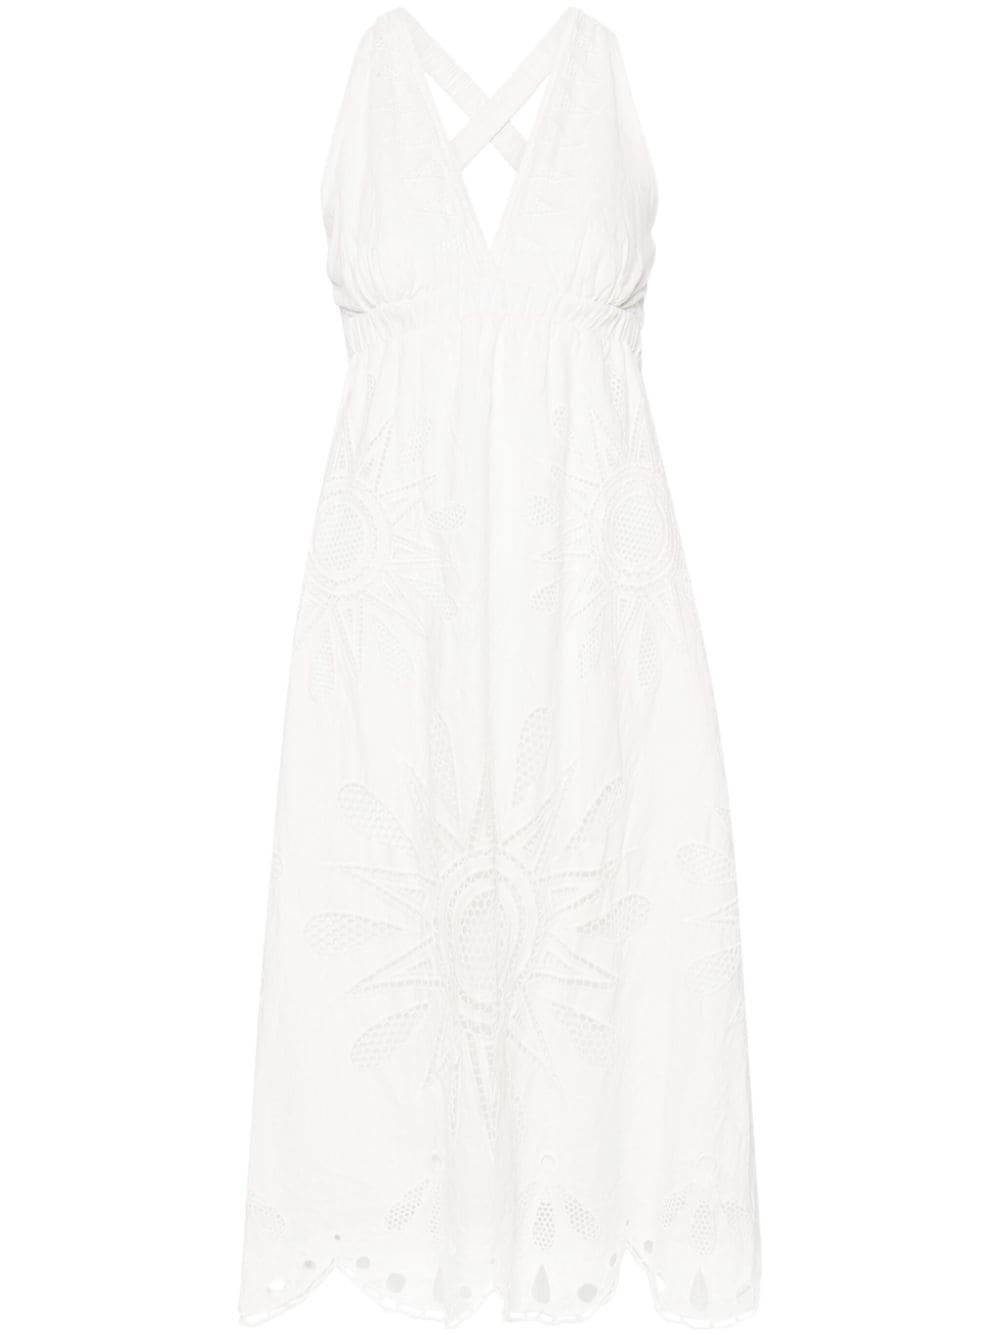 FARM Rio floral-embroidered cotton midi dress - White von FARM Rio